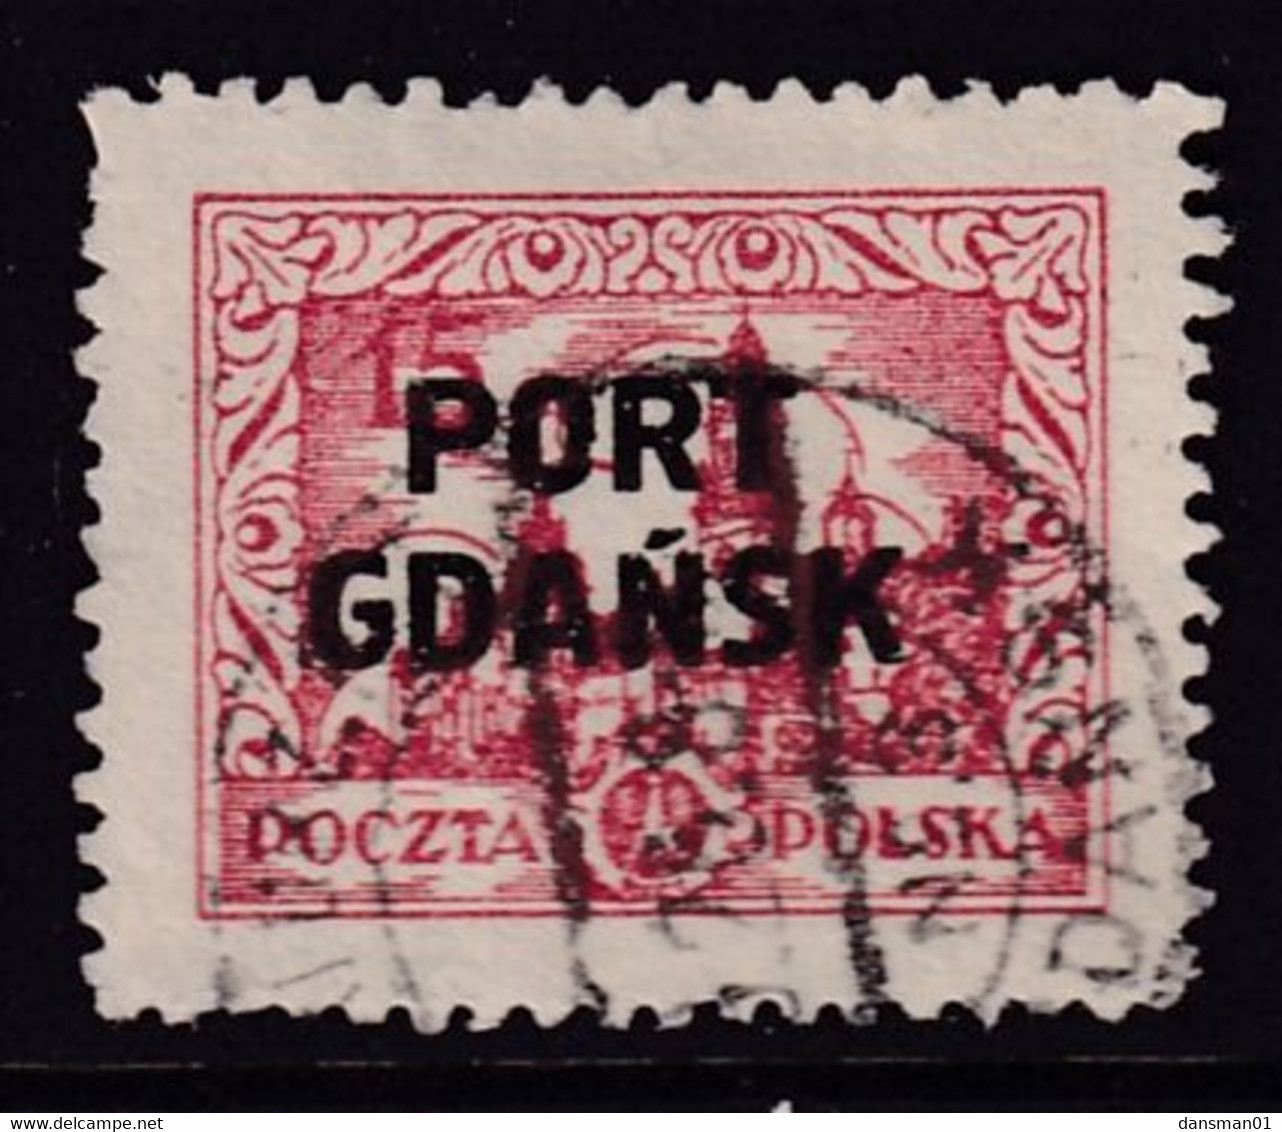 Port Gdansk 1926 Fi 14a Used Type I - Ocupaciones